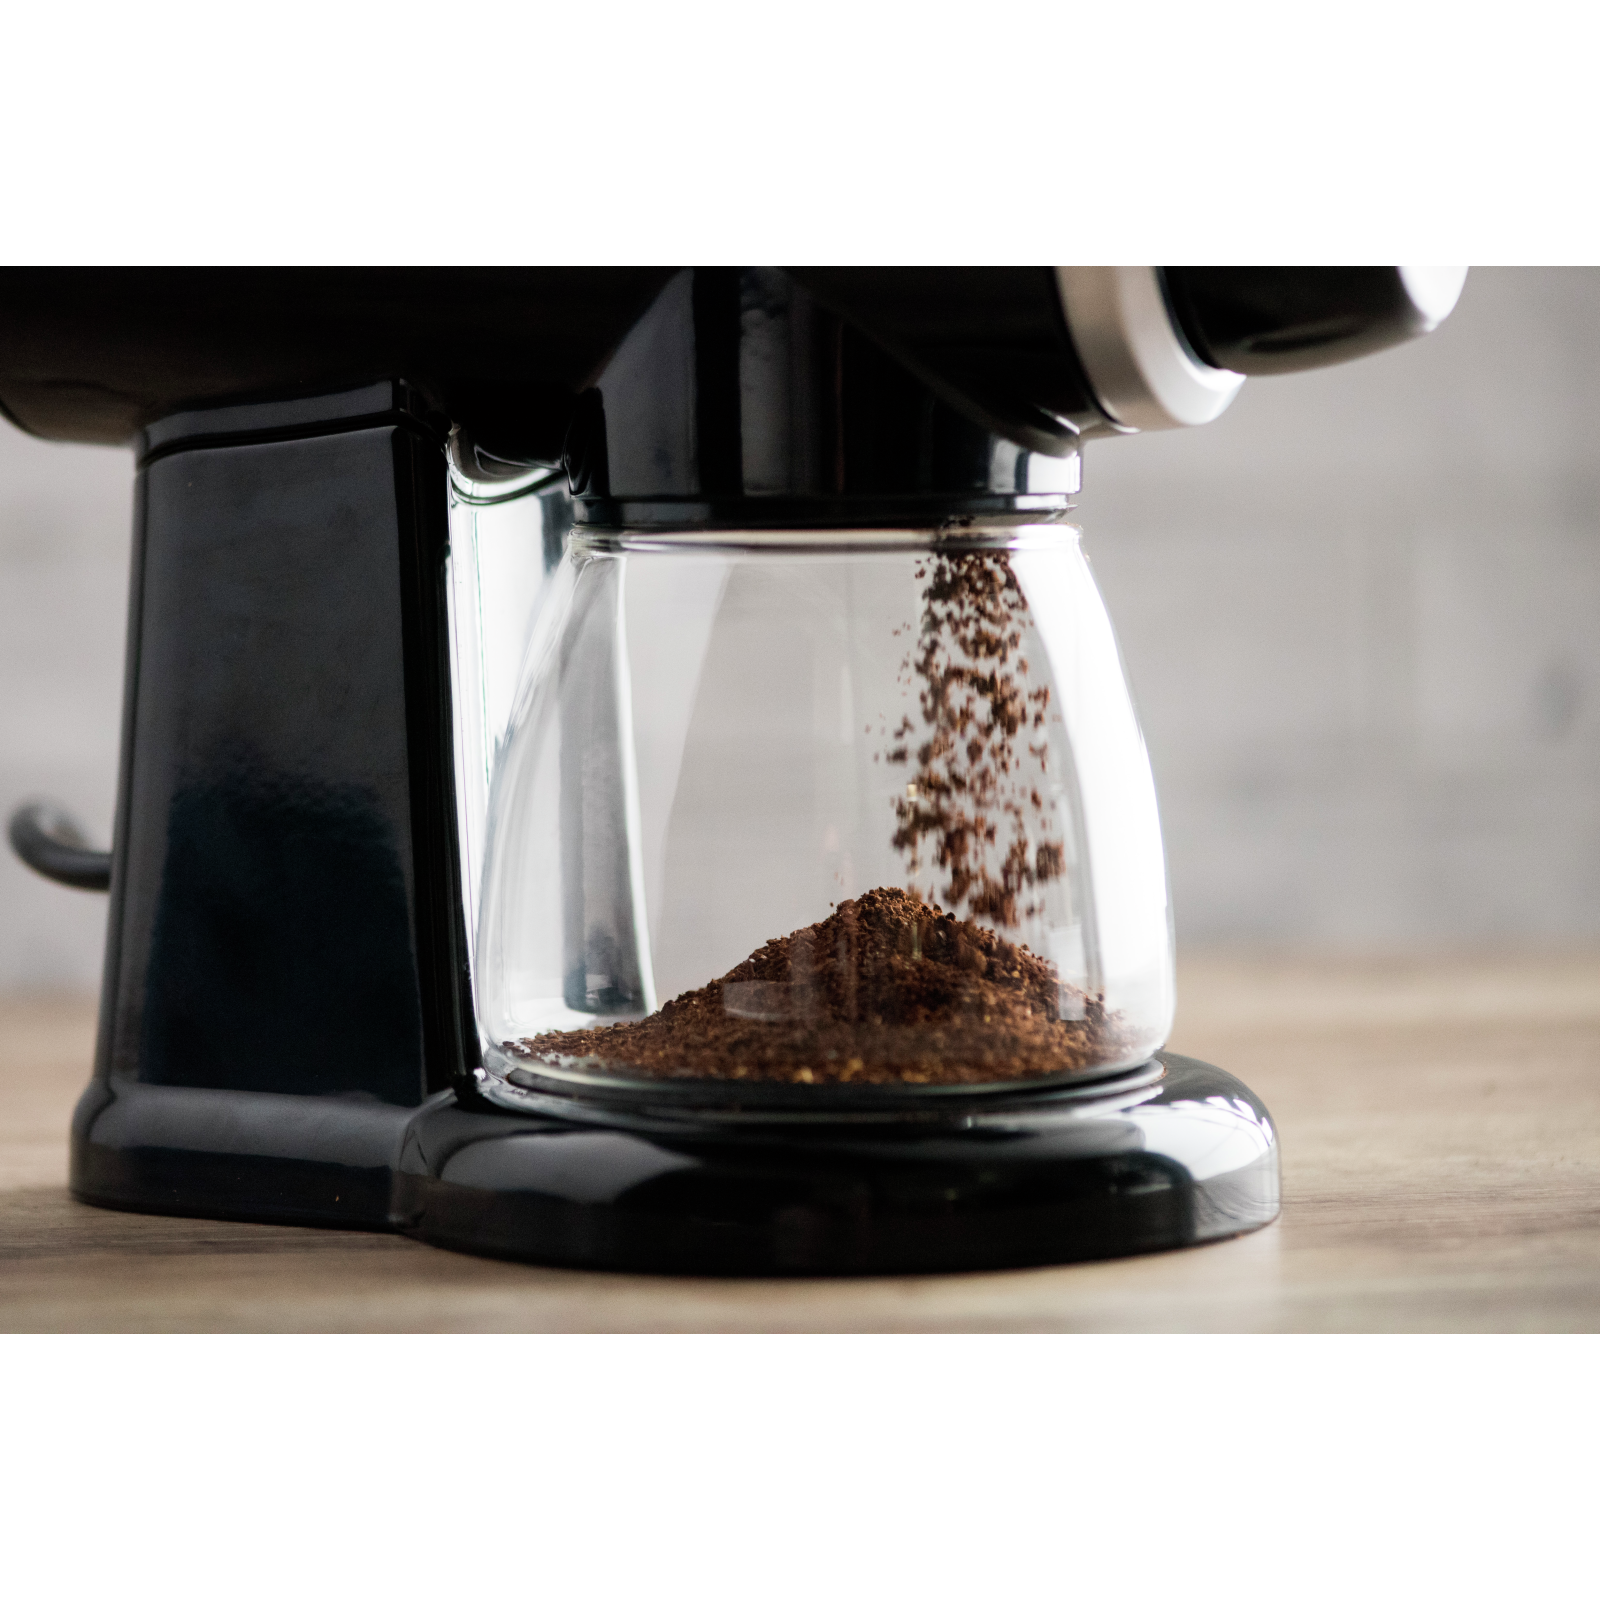 KitchenAid -  Countertop Coffee Grinder in Black - KCG0702OB